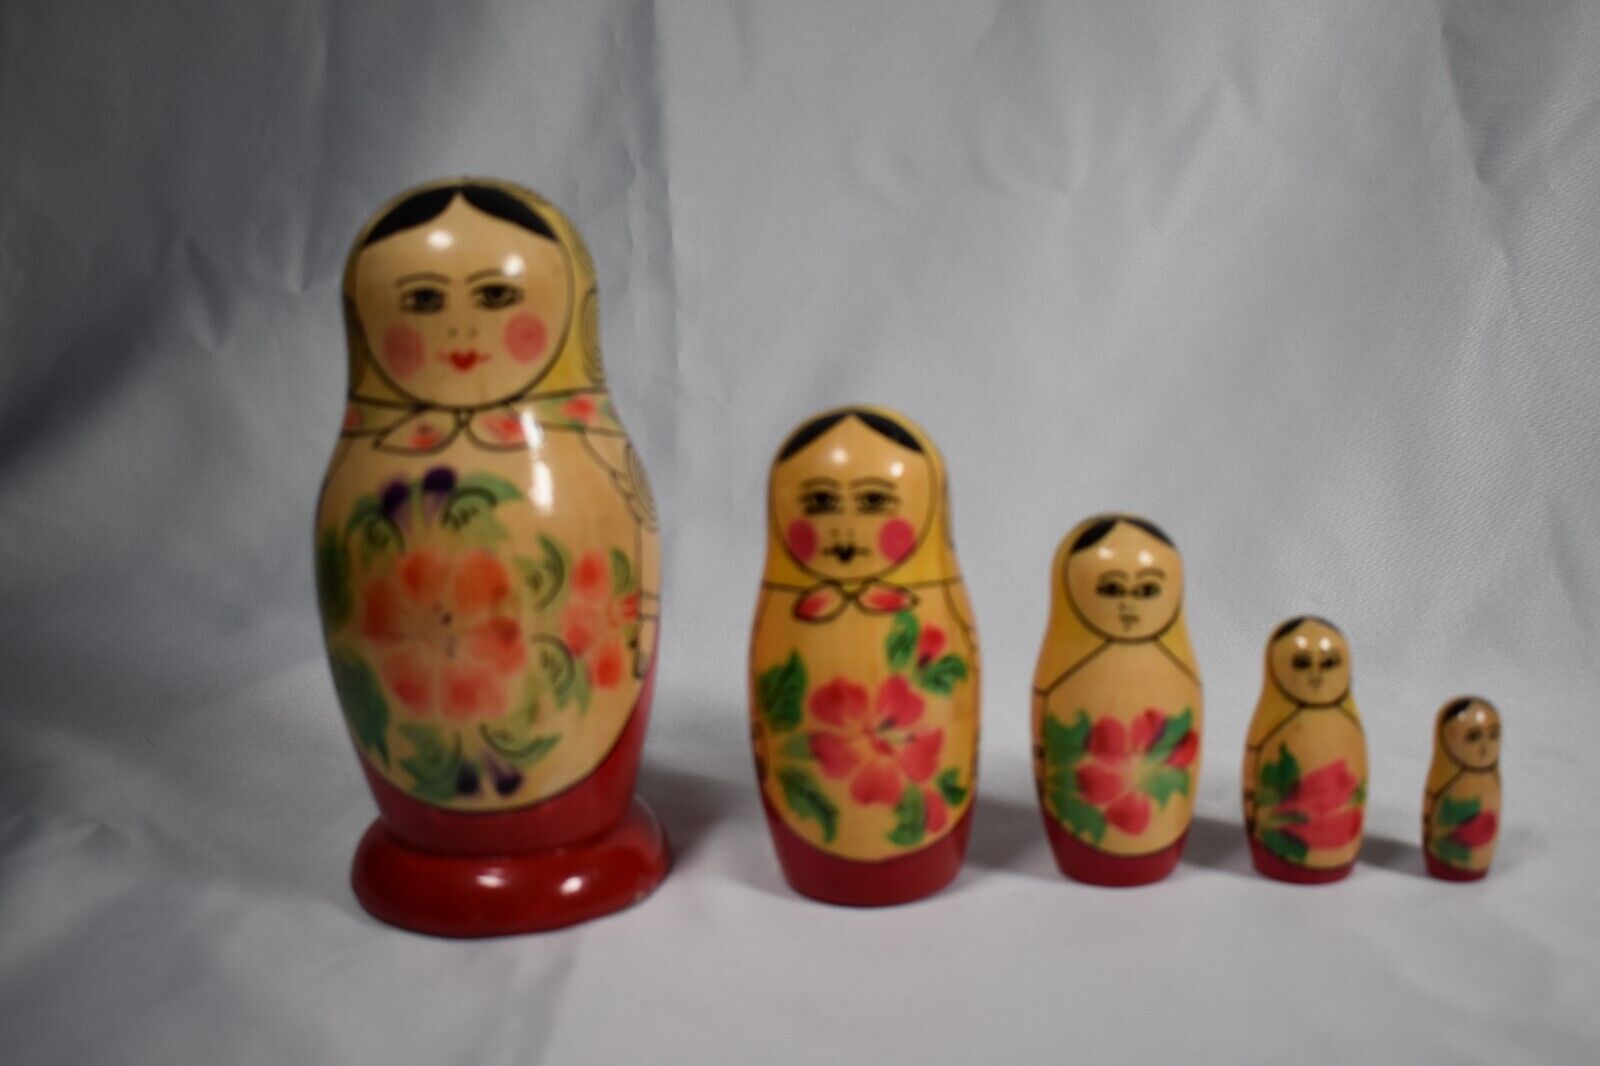 Vintage Matrioschka/Matryoshka Russian Nesting Dolls - 5 Lady Figures